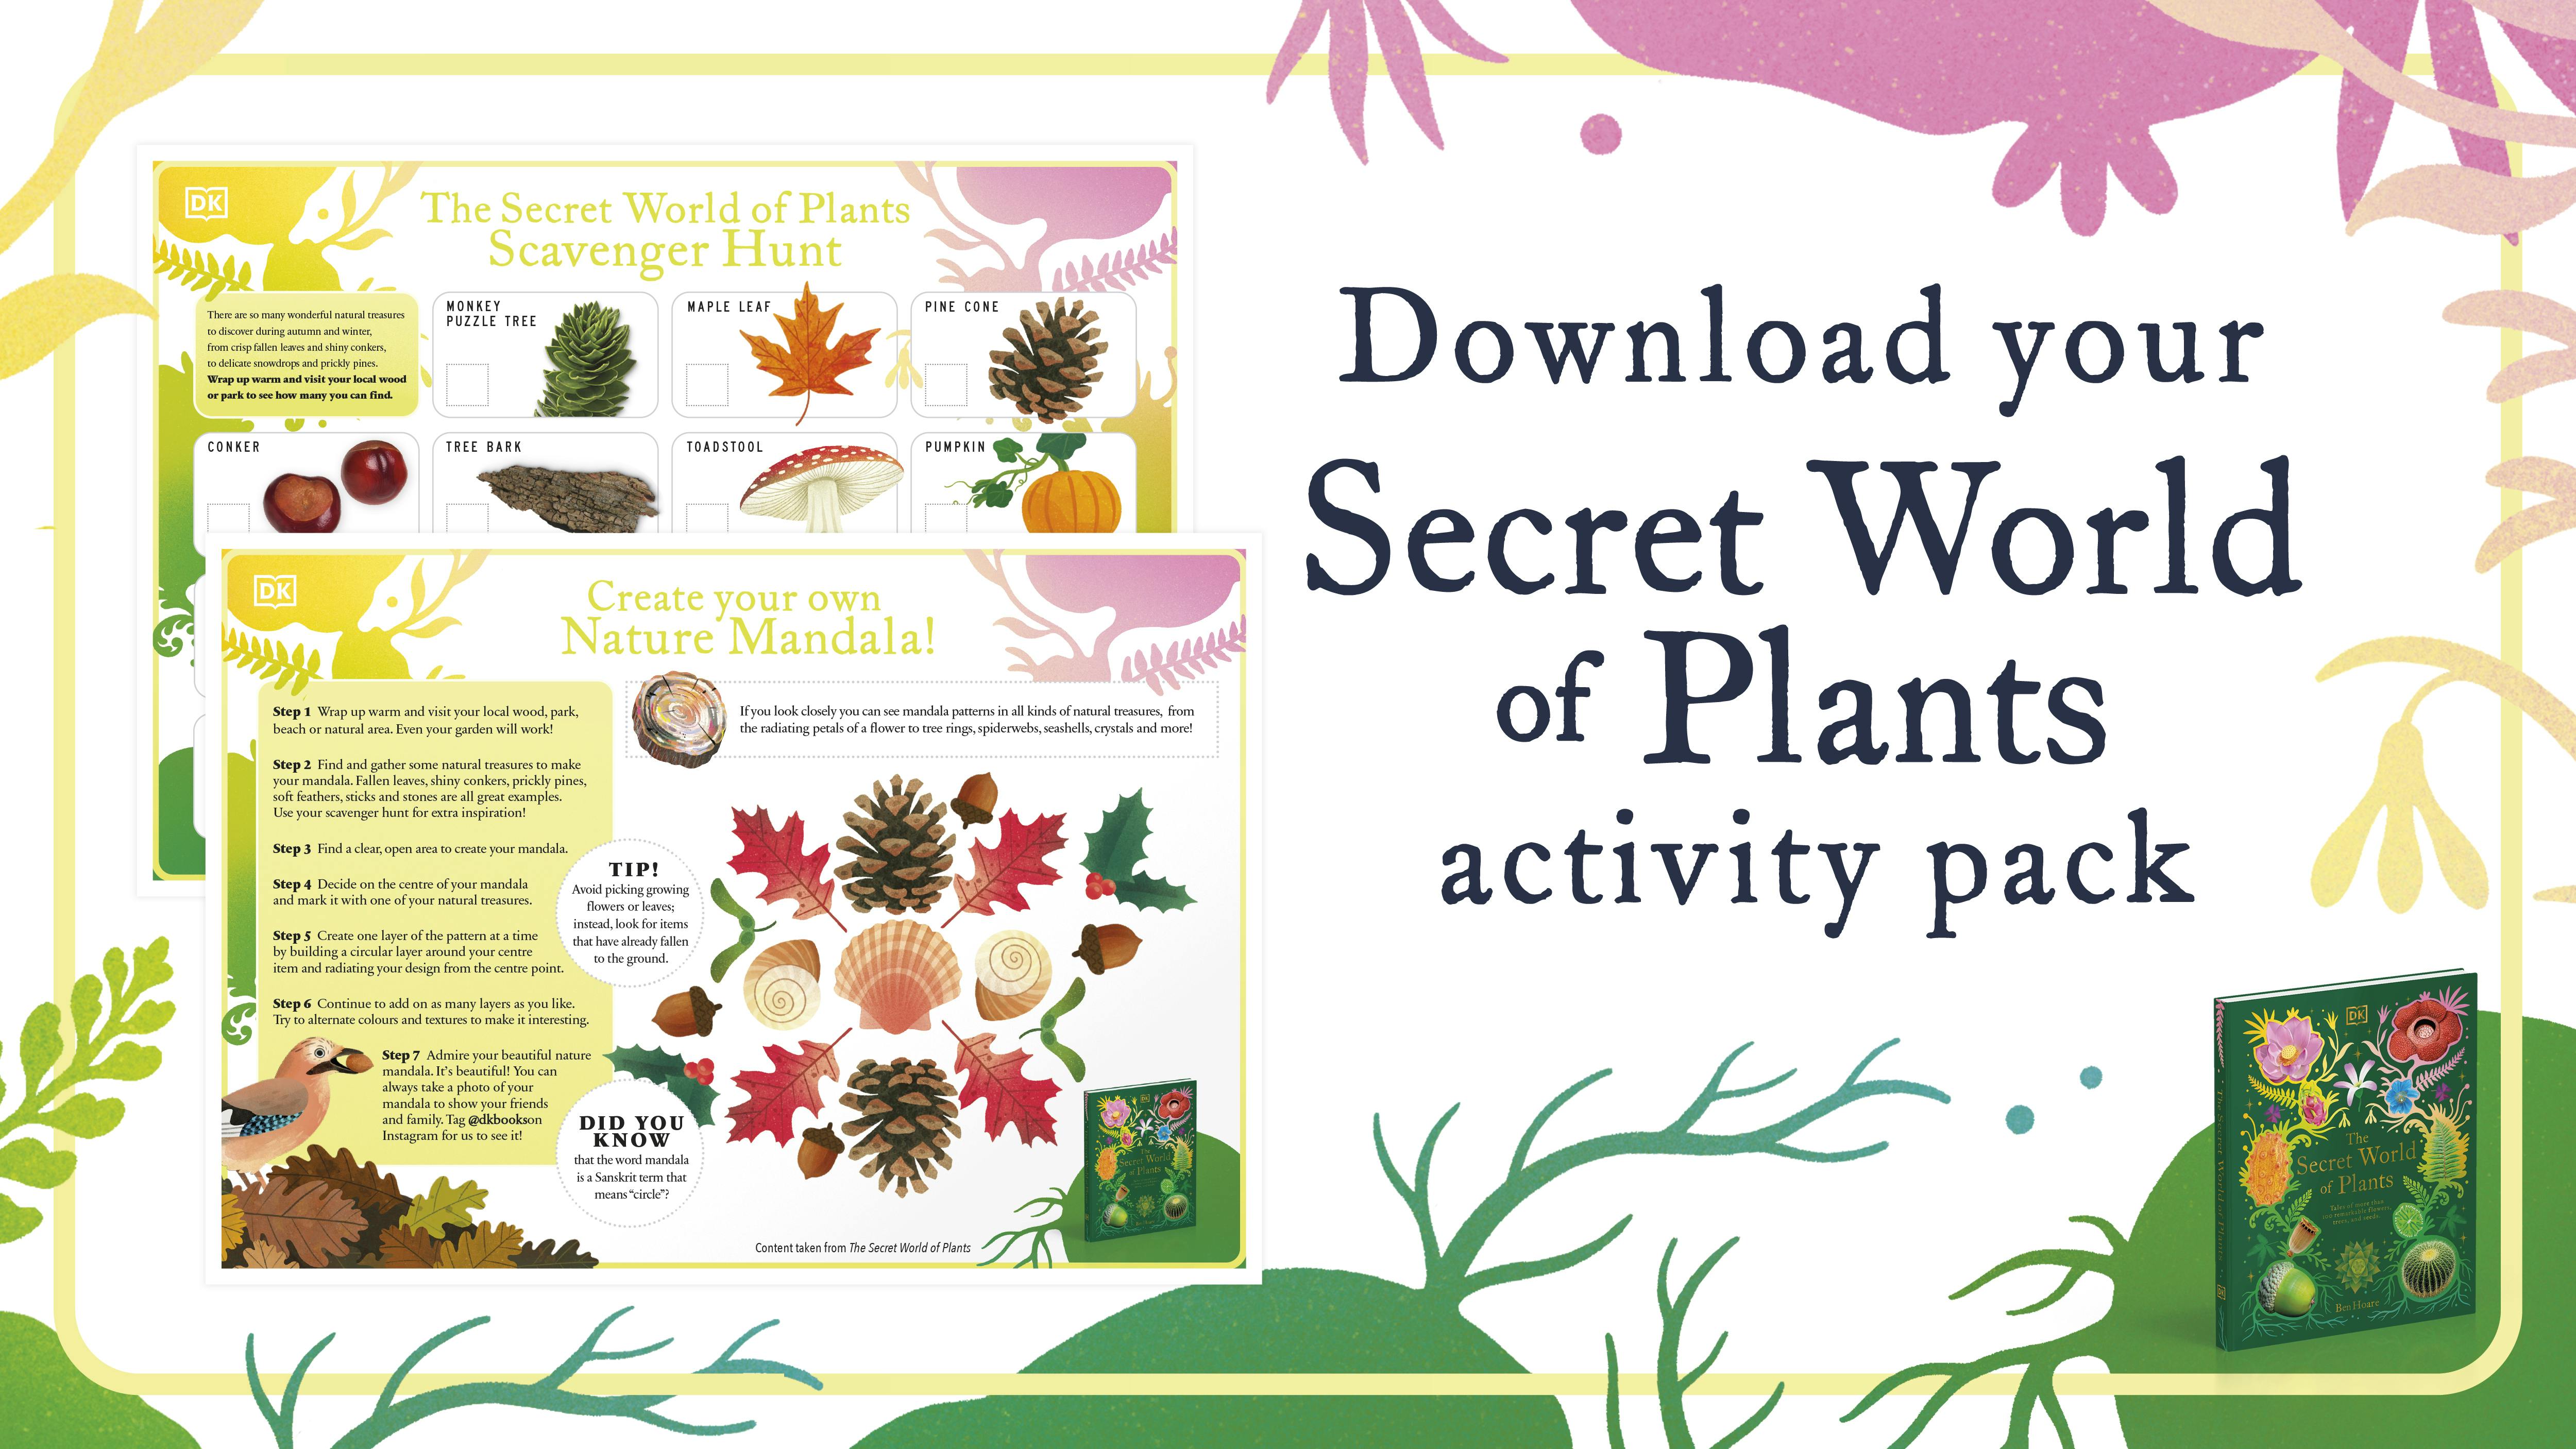 The Secret World of Plants activity pack